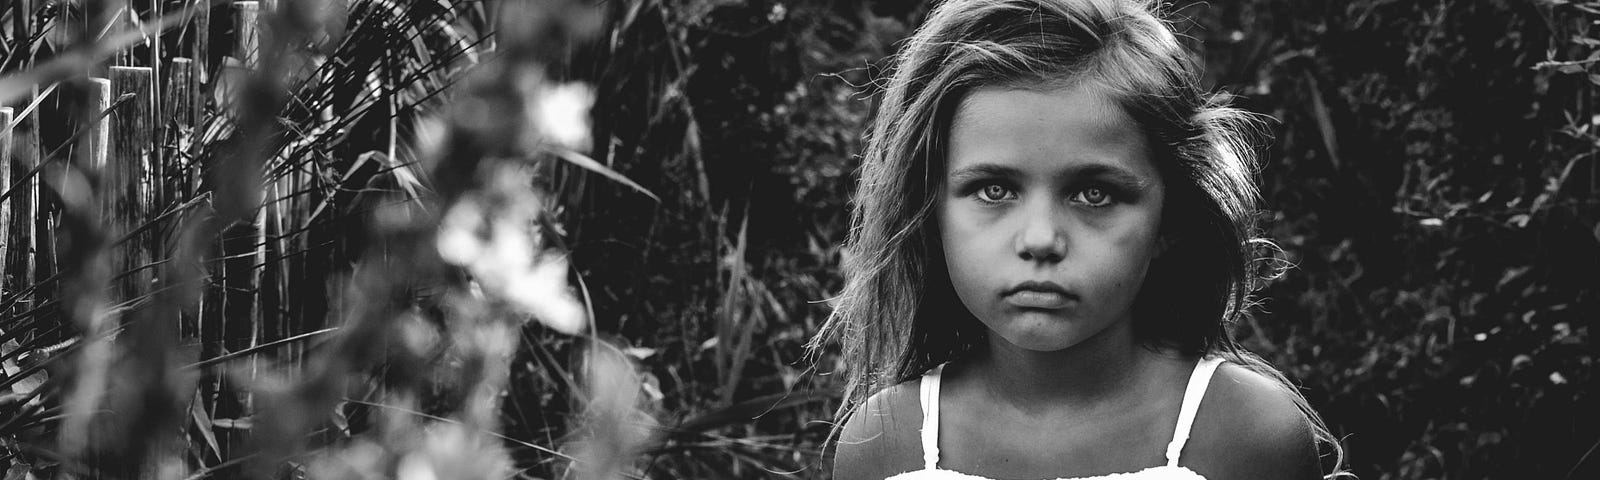 Black & white photo of a sad little girl.